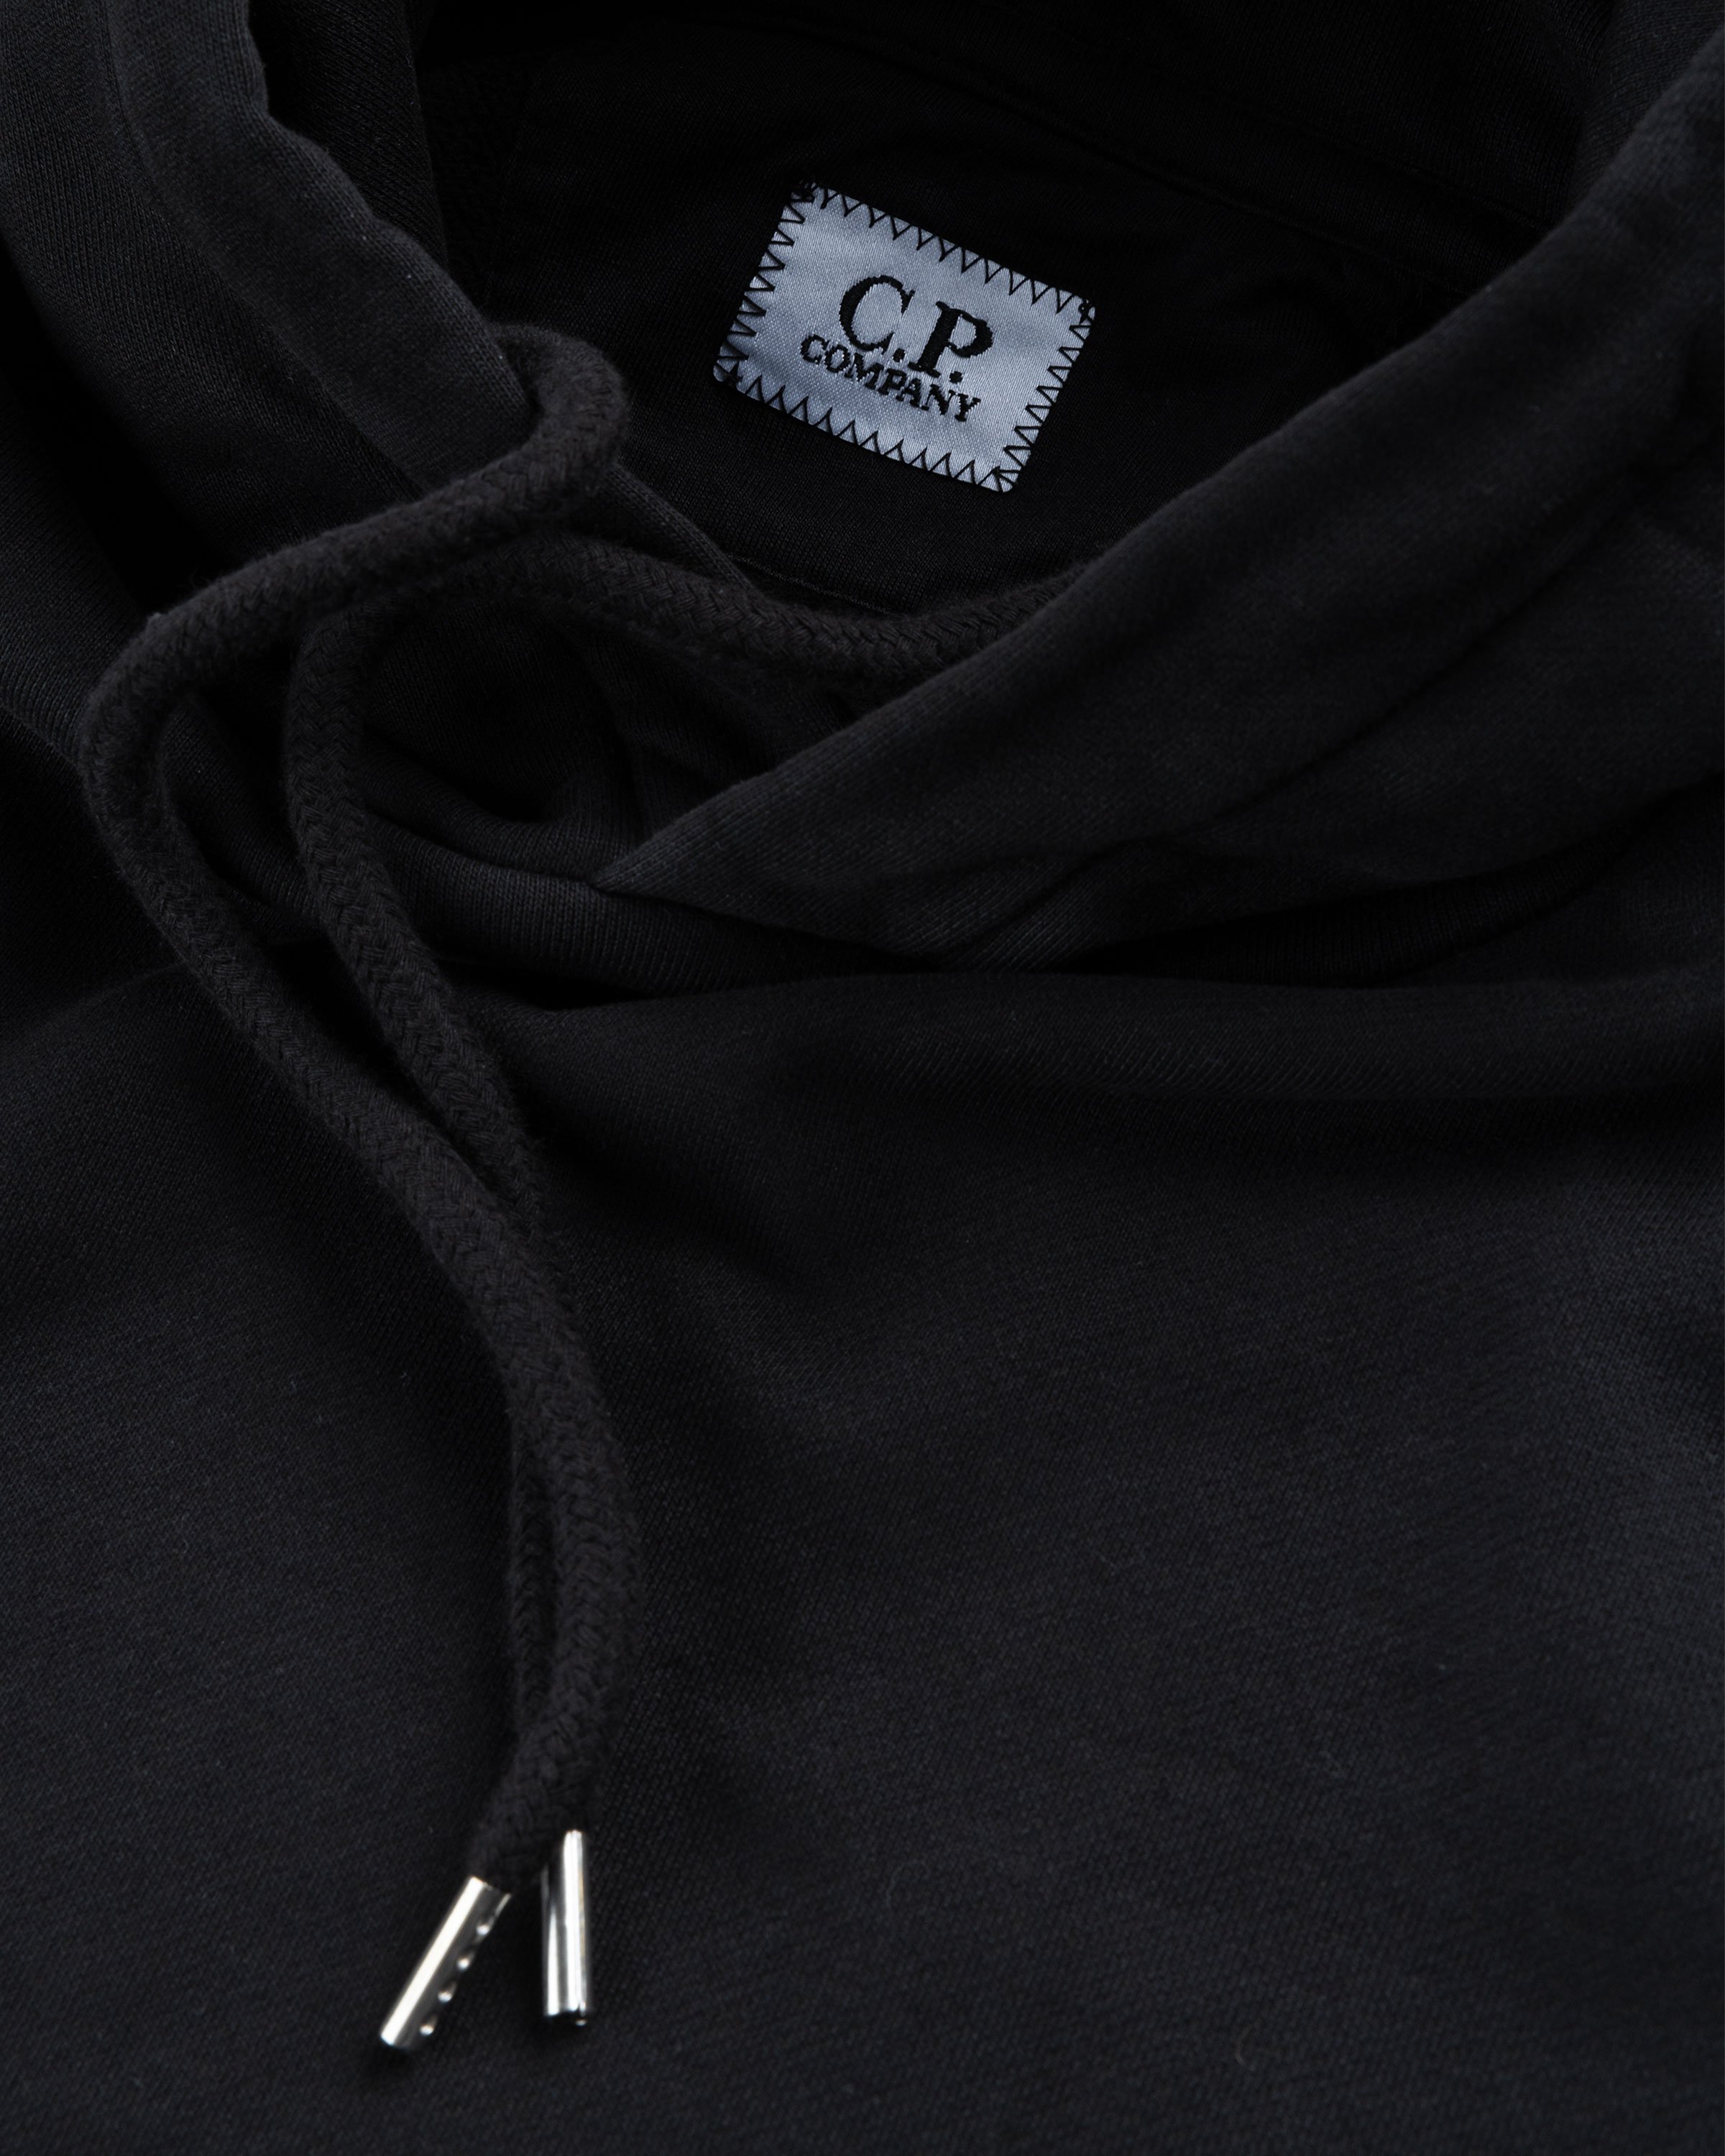 C.P. Company - Hoodie Black - Clothing - Black - Image 5